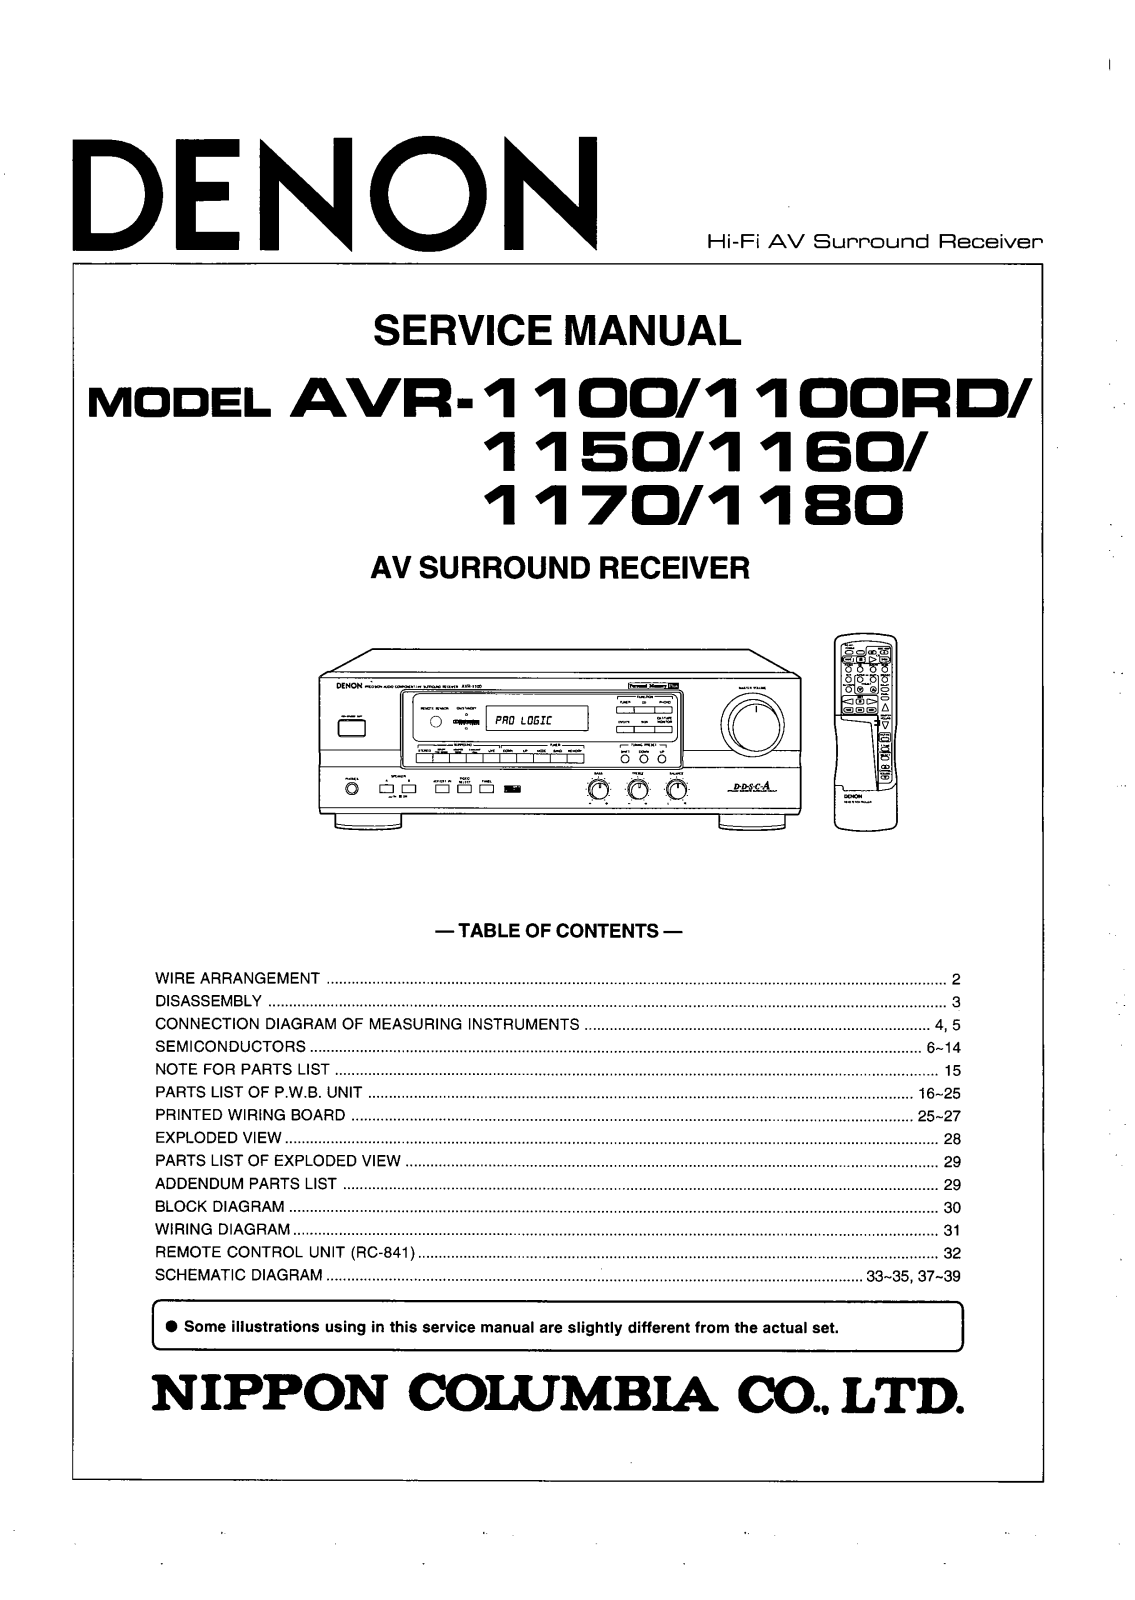 Denon AVR-1150, AVR-1160, AVR-1170, AVR-1180 Schematic